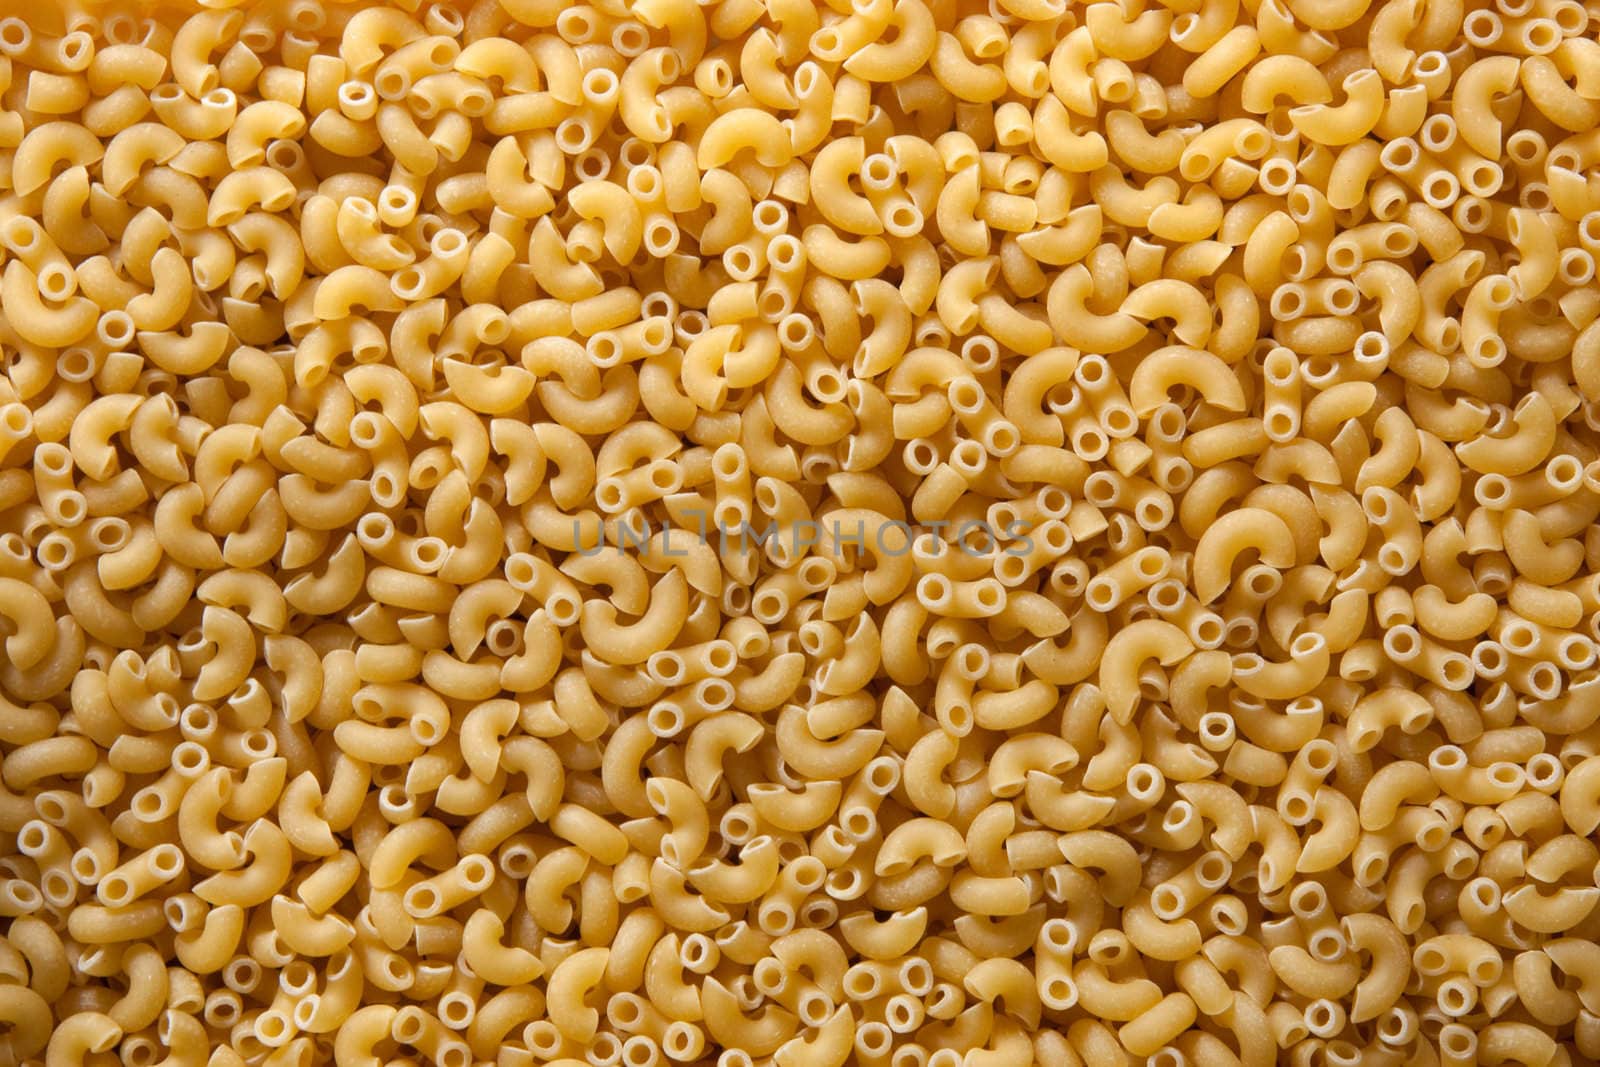 Elbow macaroni by raliand